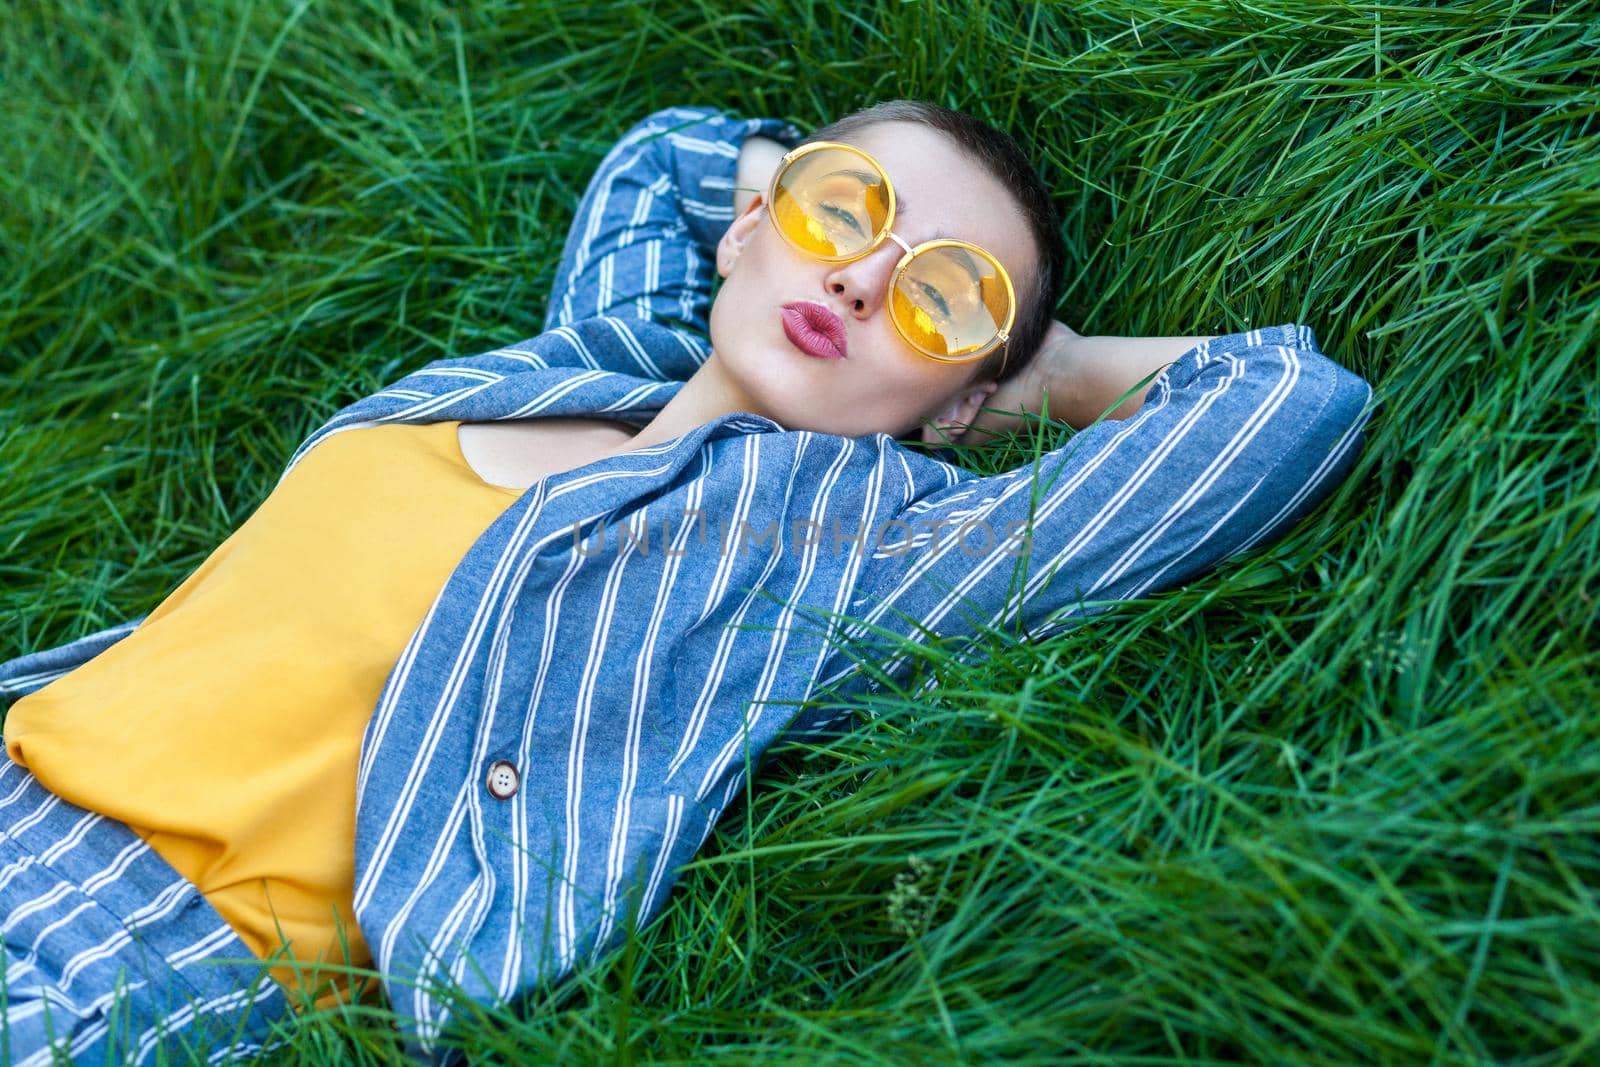 Beautiful girl enjoy on green grass on summertime by Khosro1